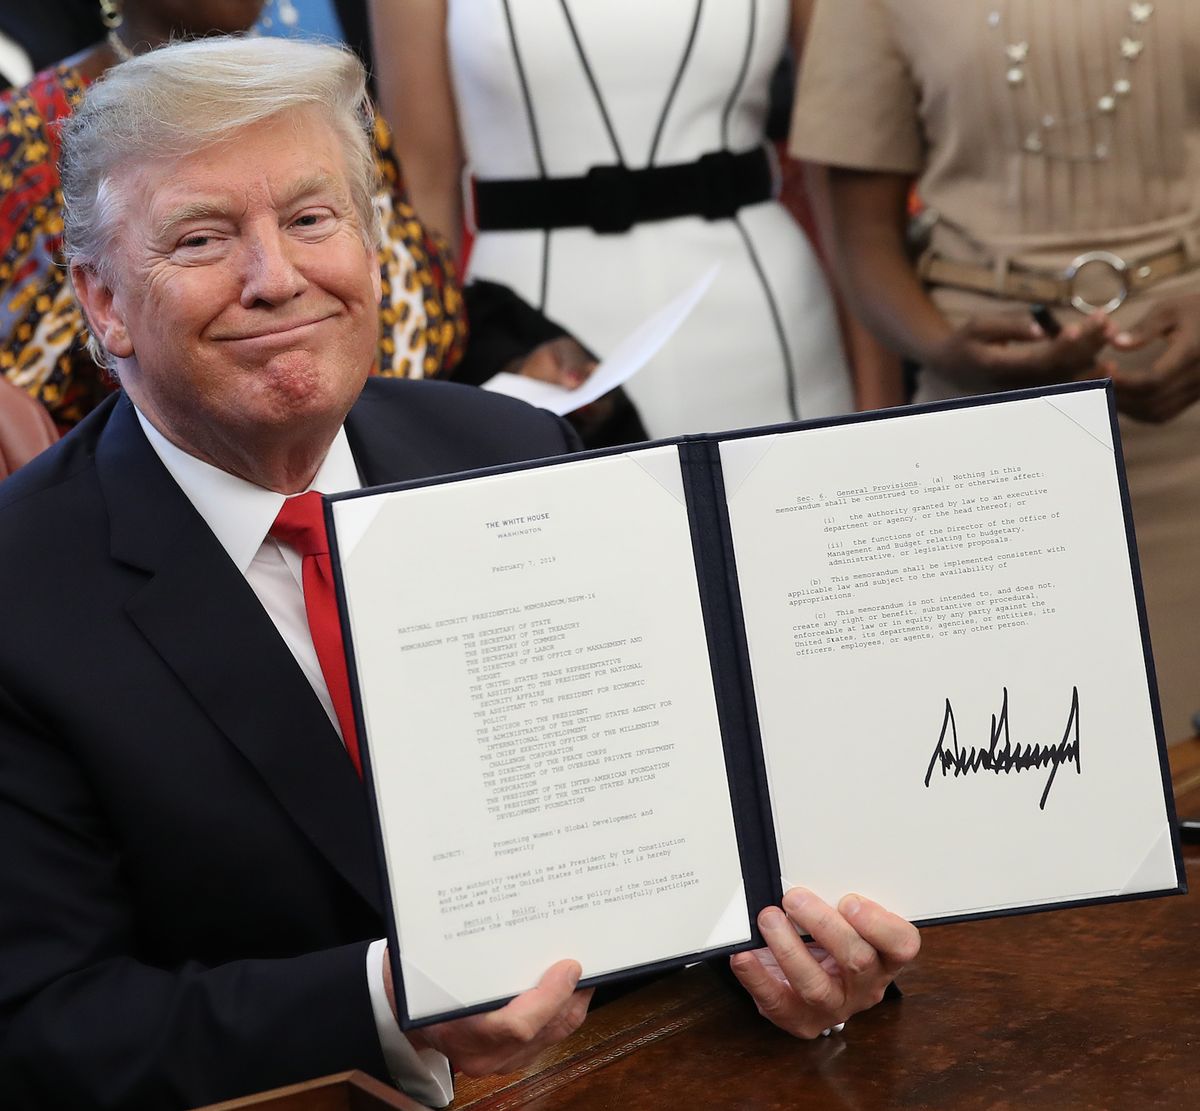 President Trump Signs Memorandum Launching The "Women's Global Development And Prosperity" Initiative